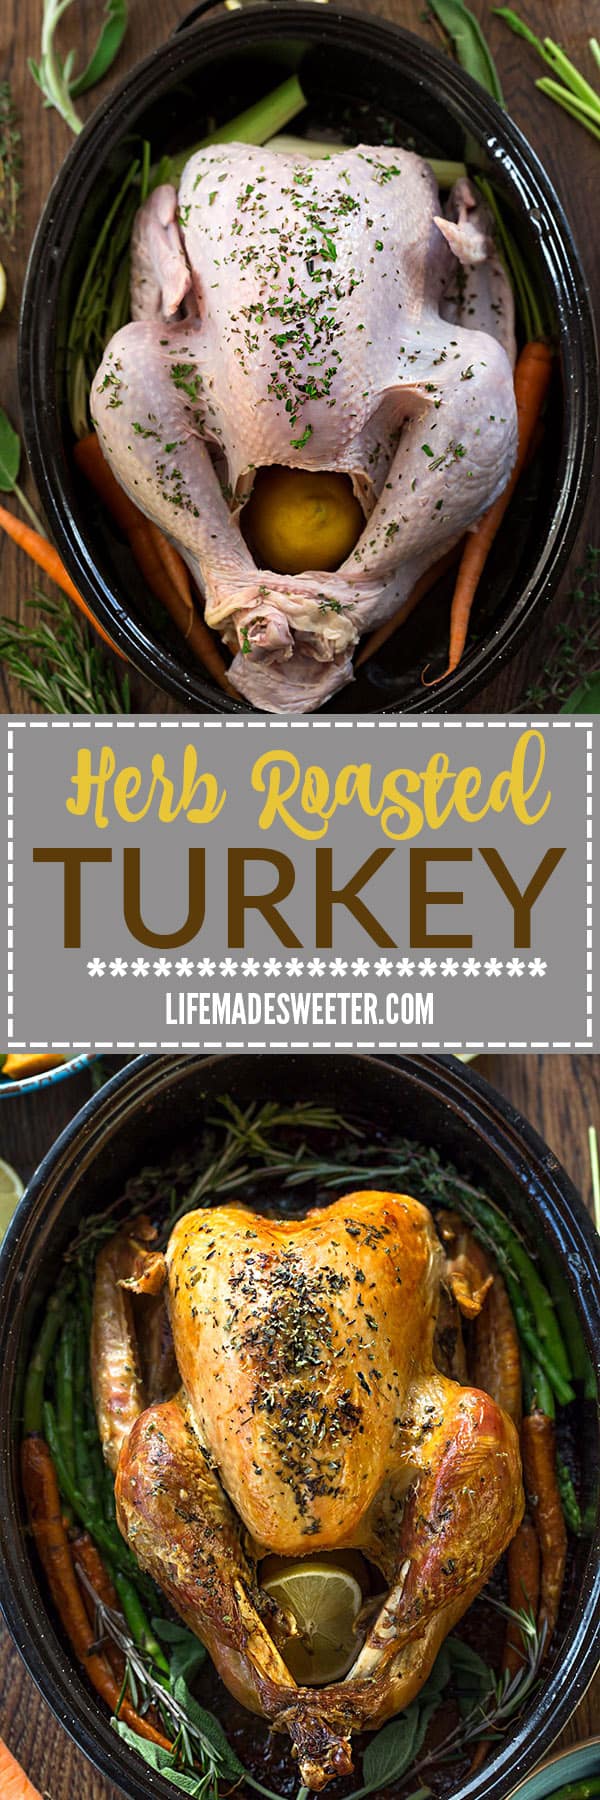 herb_garlic_butter_roasted_turkey_lifemadesweeter-com-2